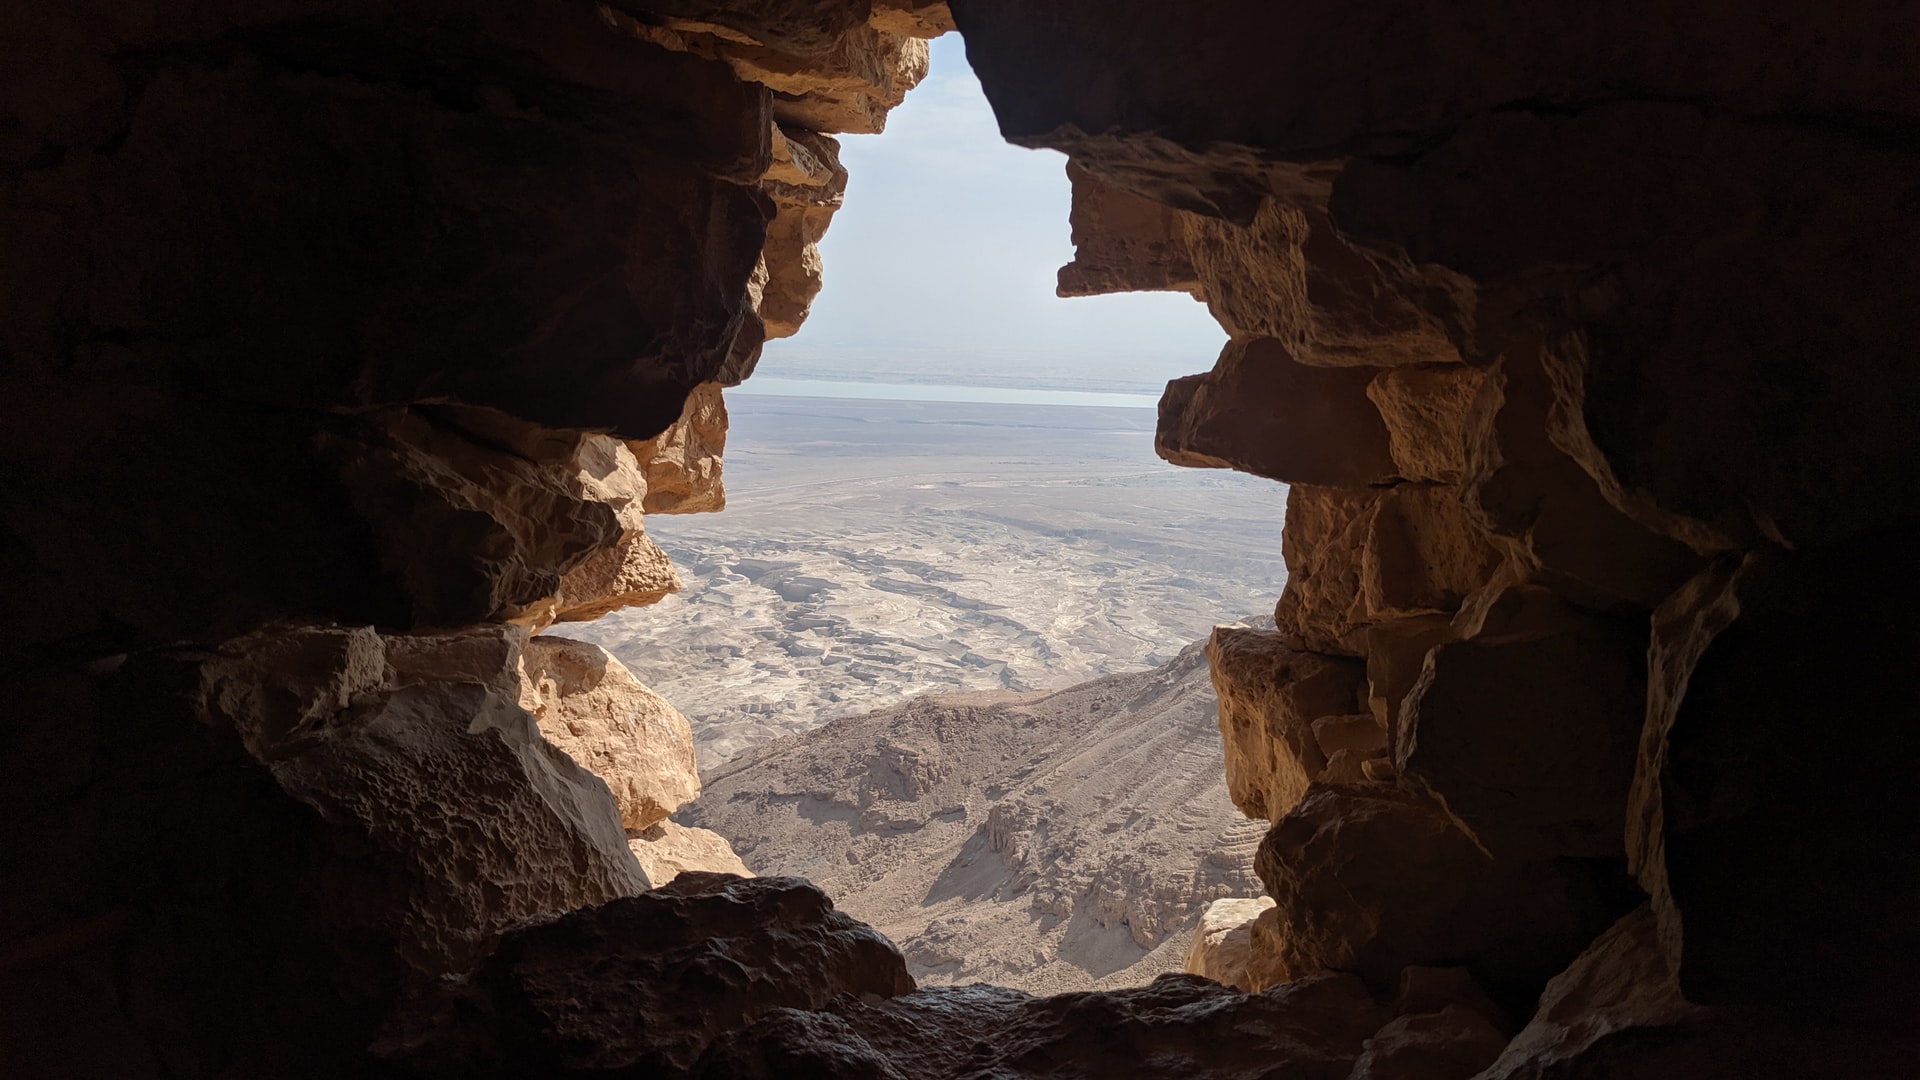 Looking through an ancient stone wall opening at the Masada ruins in Israel